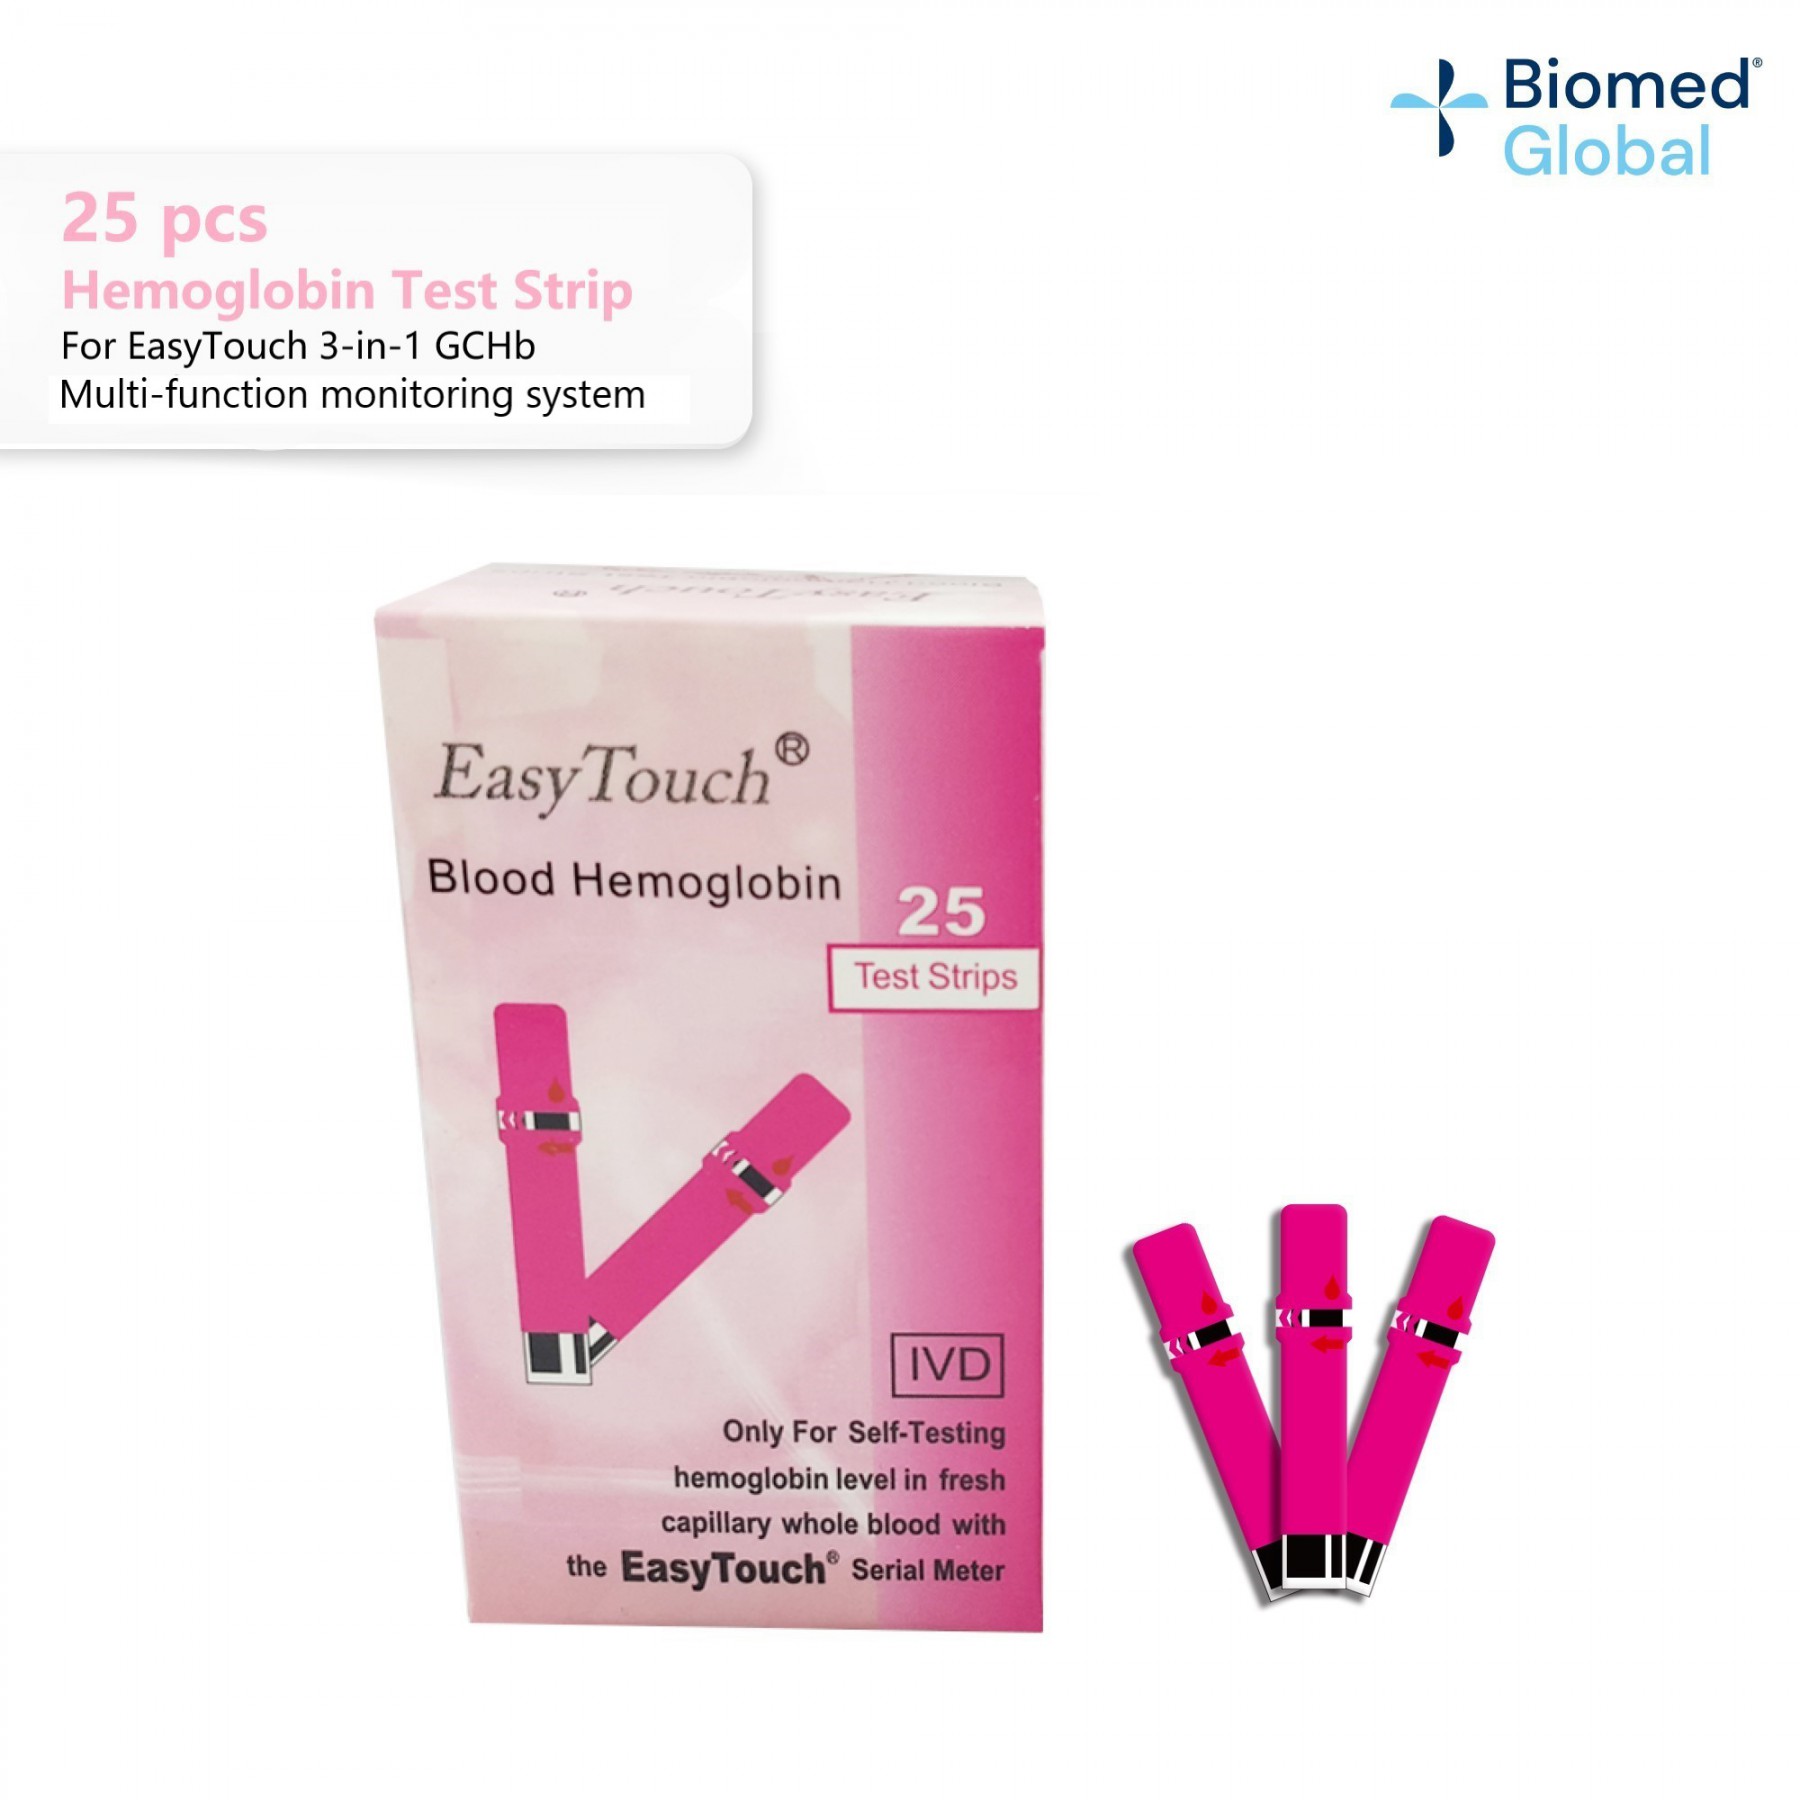 EasyTouch GCHb Hemoglobin Test Strip, 25 Strips/Box, FREE with 25 pieces Blood Lancet (BUNDLE PACK)